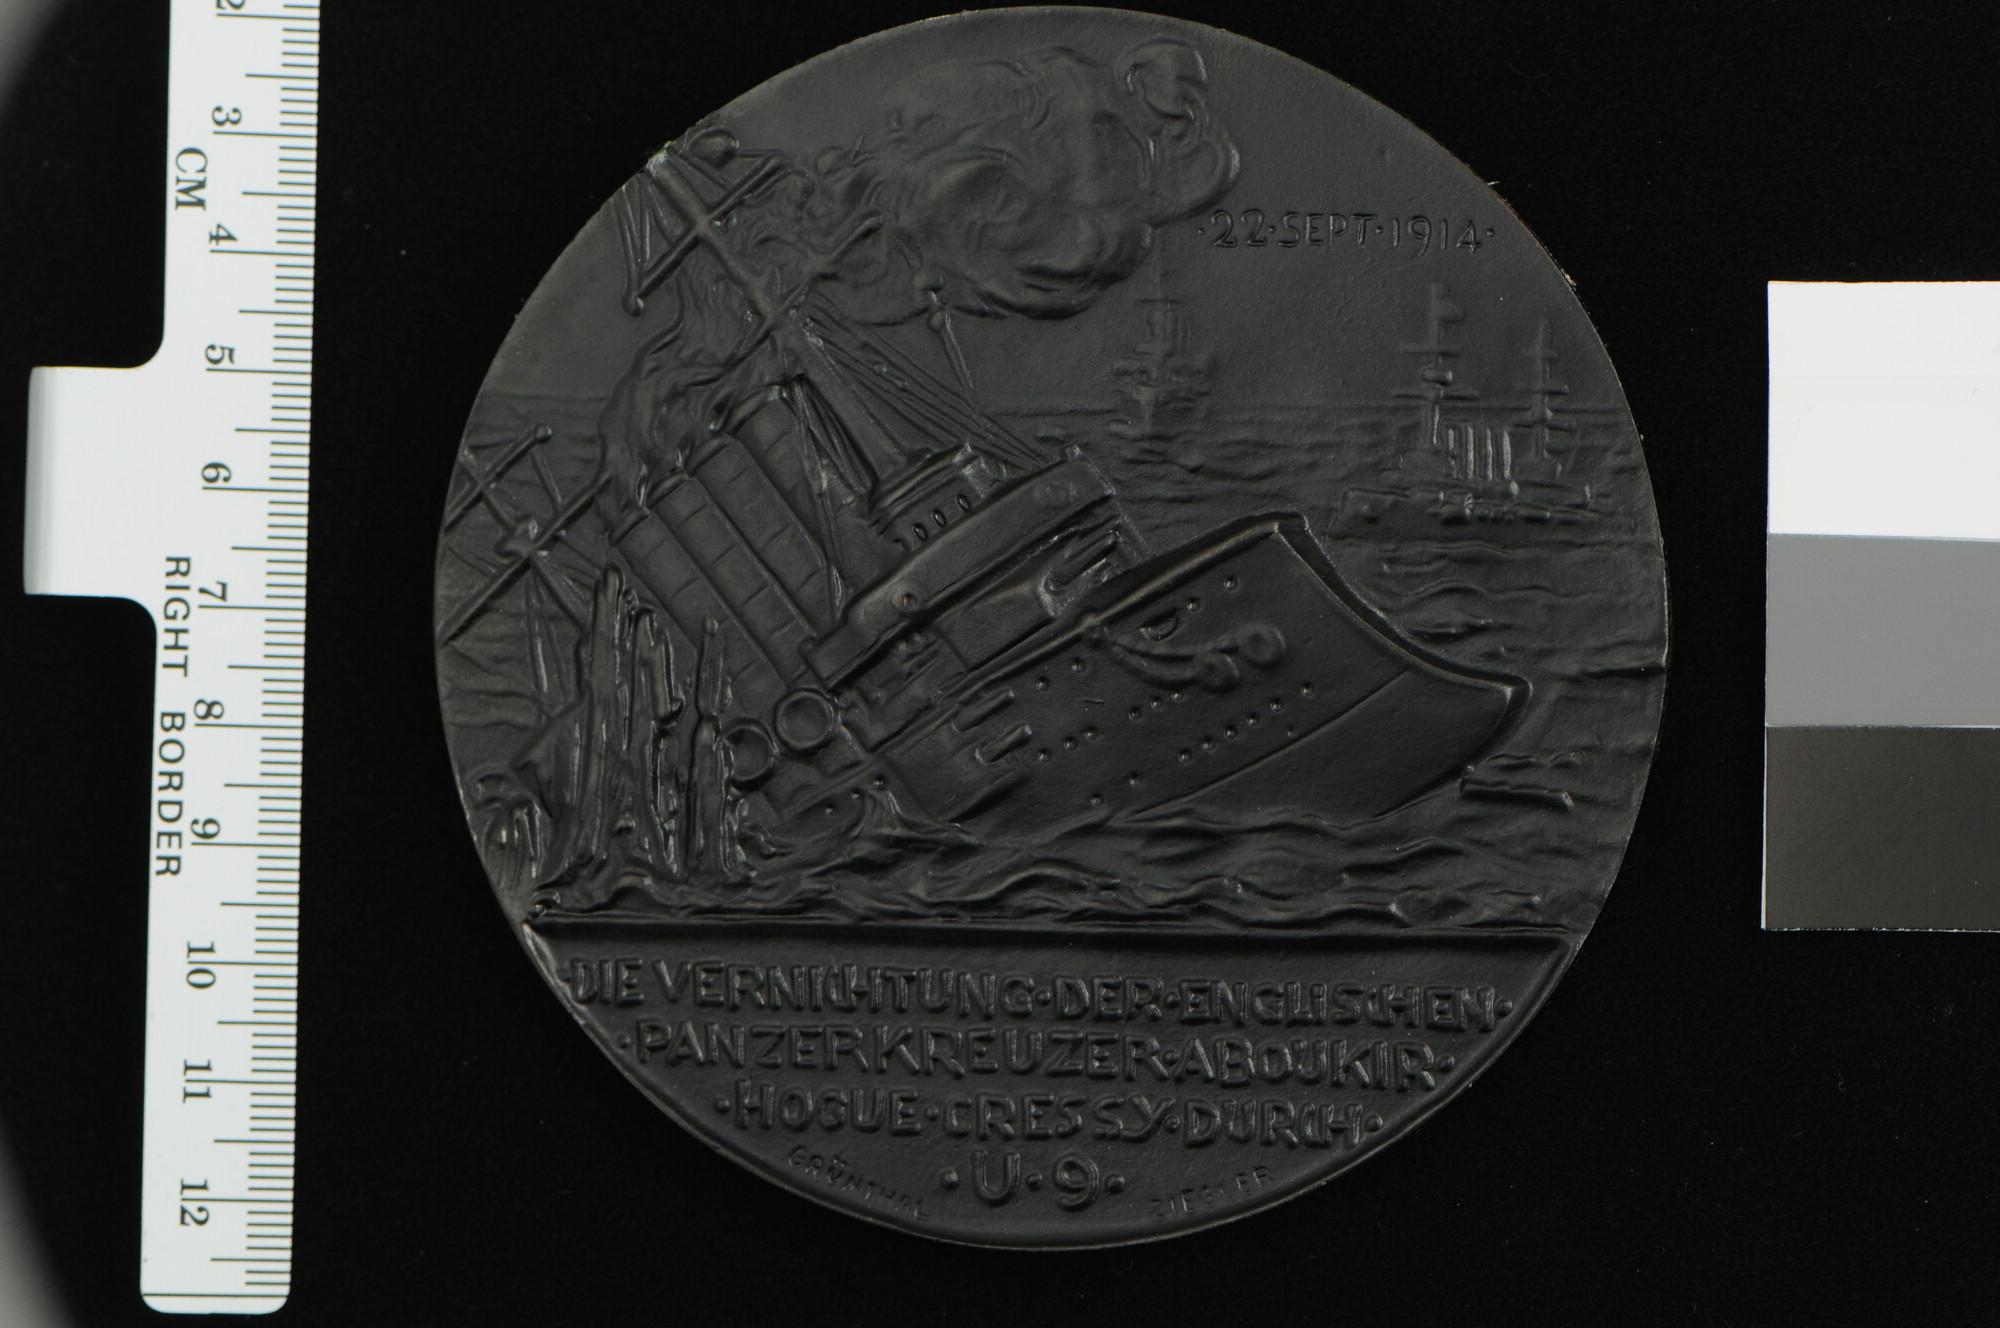 A.0042(02); Duitse penning op het tot zinken brengen van drie Engelse kruisers, 1914; penning